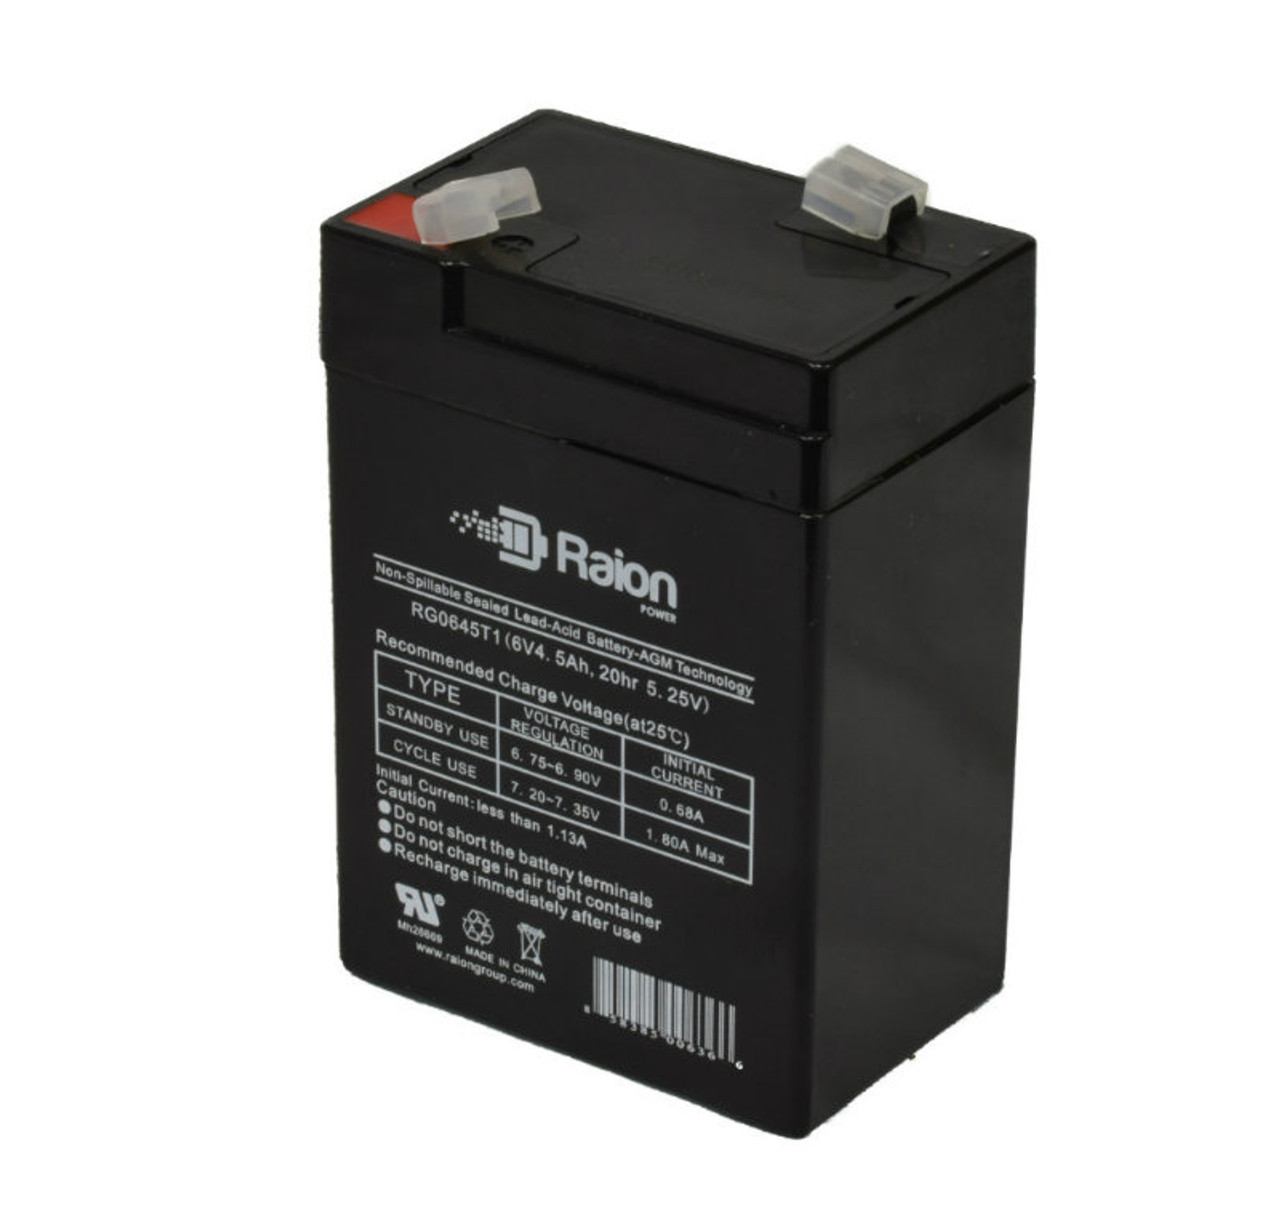 Raion Power RG0645T1 6V 4.5Ah Replacement Battery Cartridge for Kaiying KS4-6C